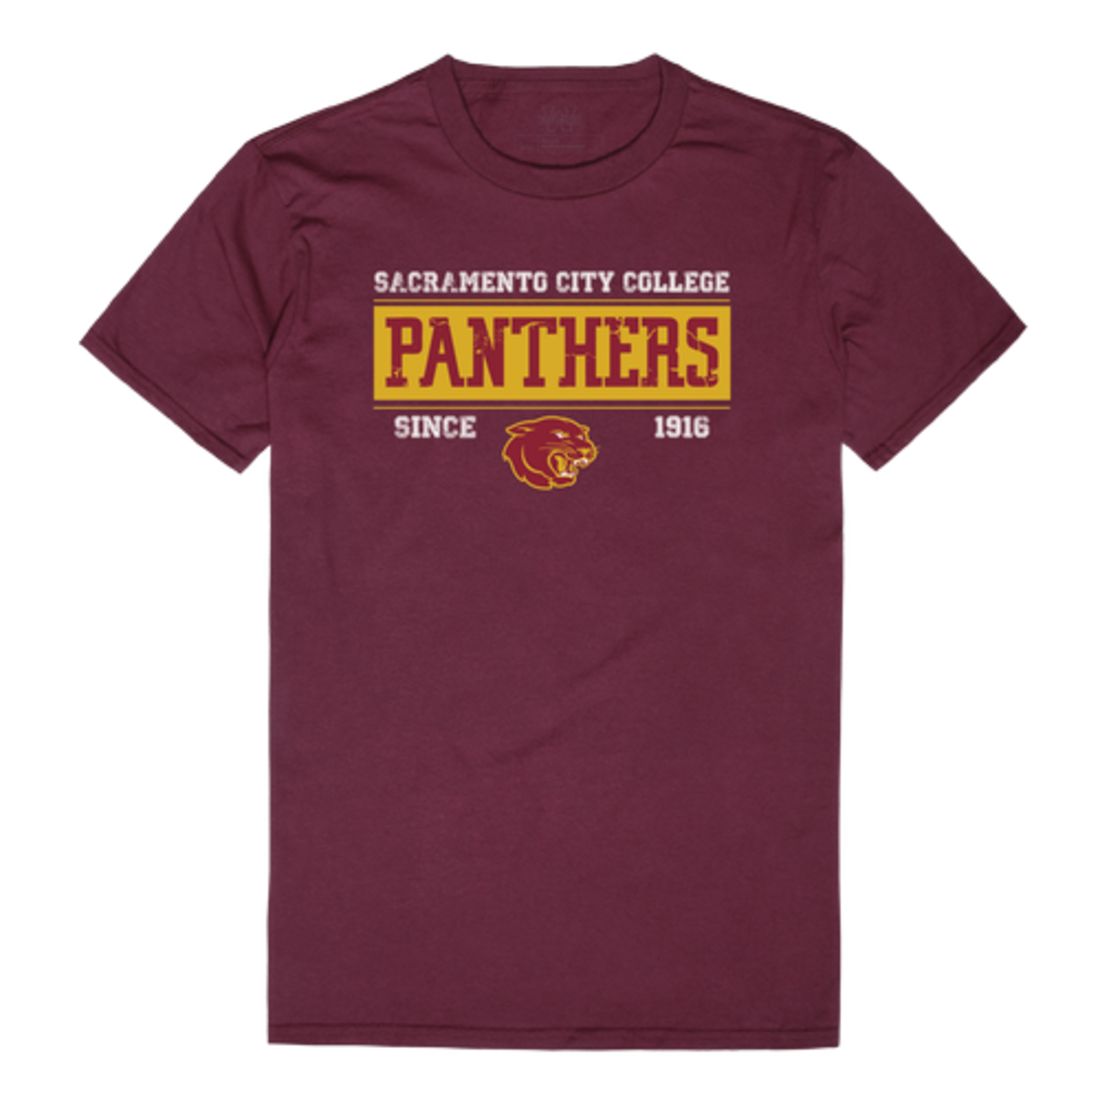 Sacramento City College Panthers Established T-Shirt Tee